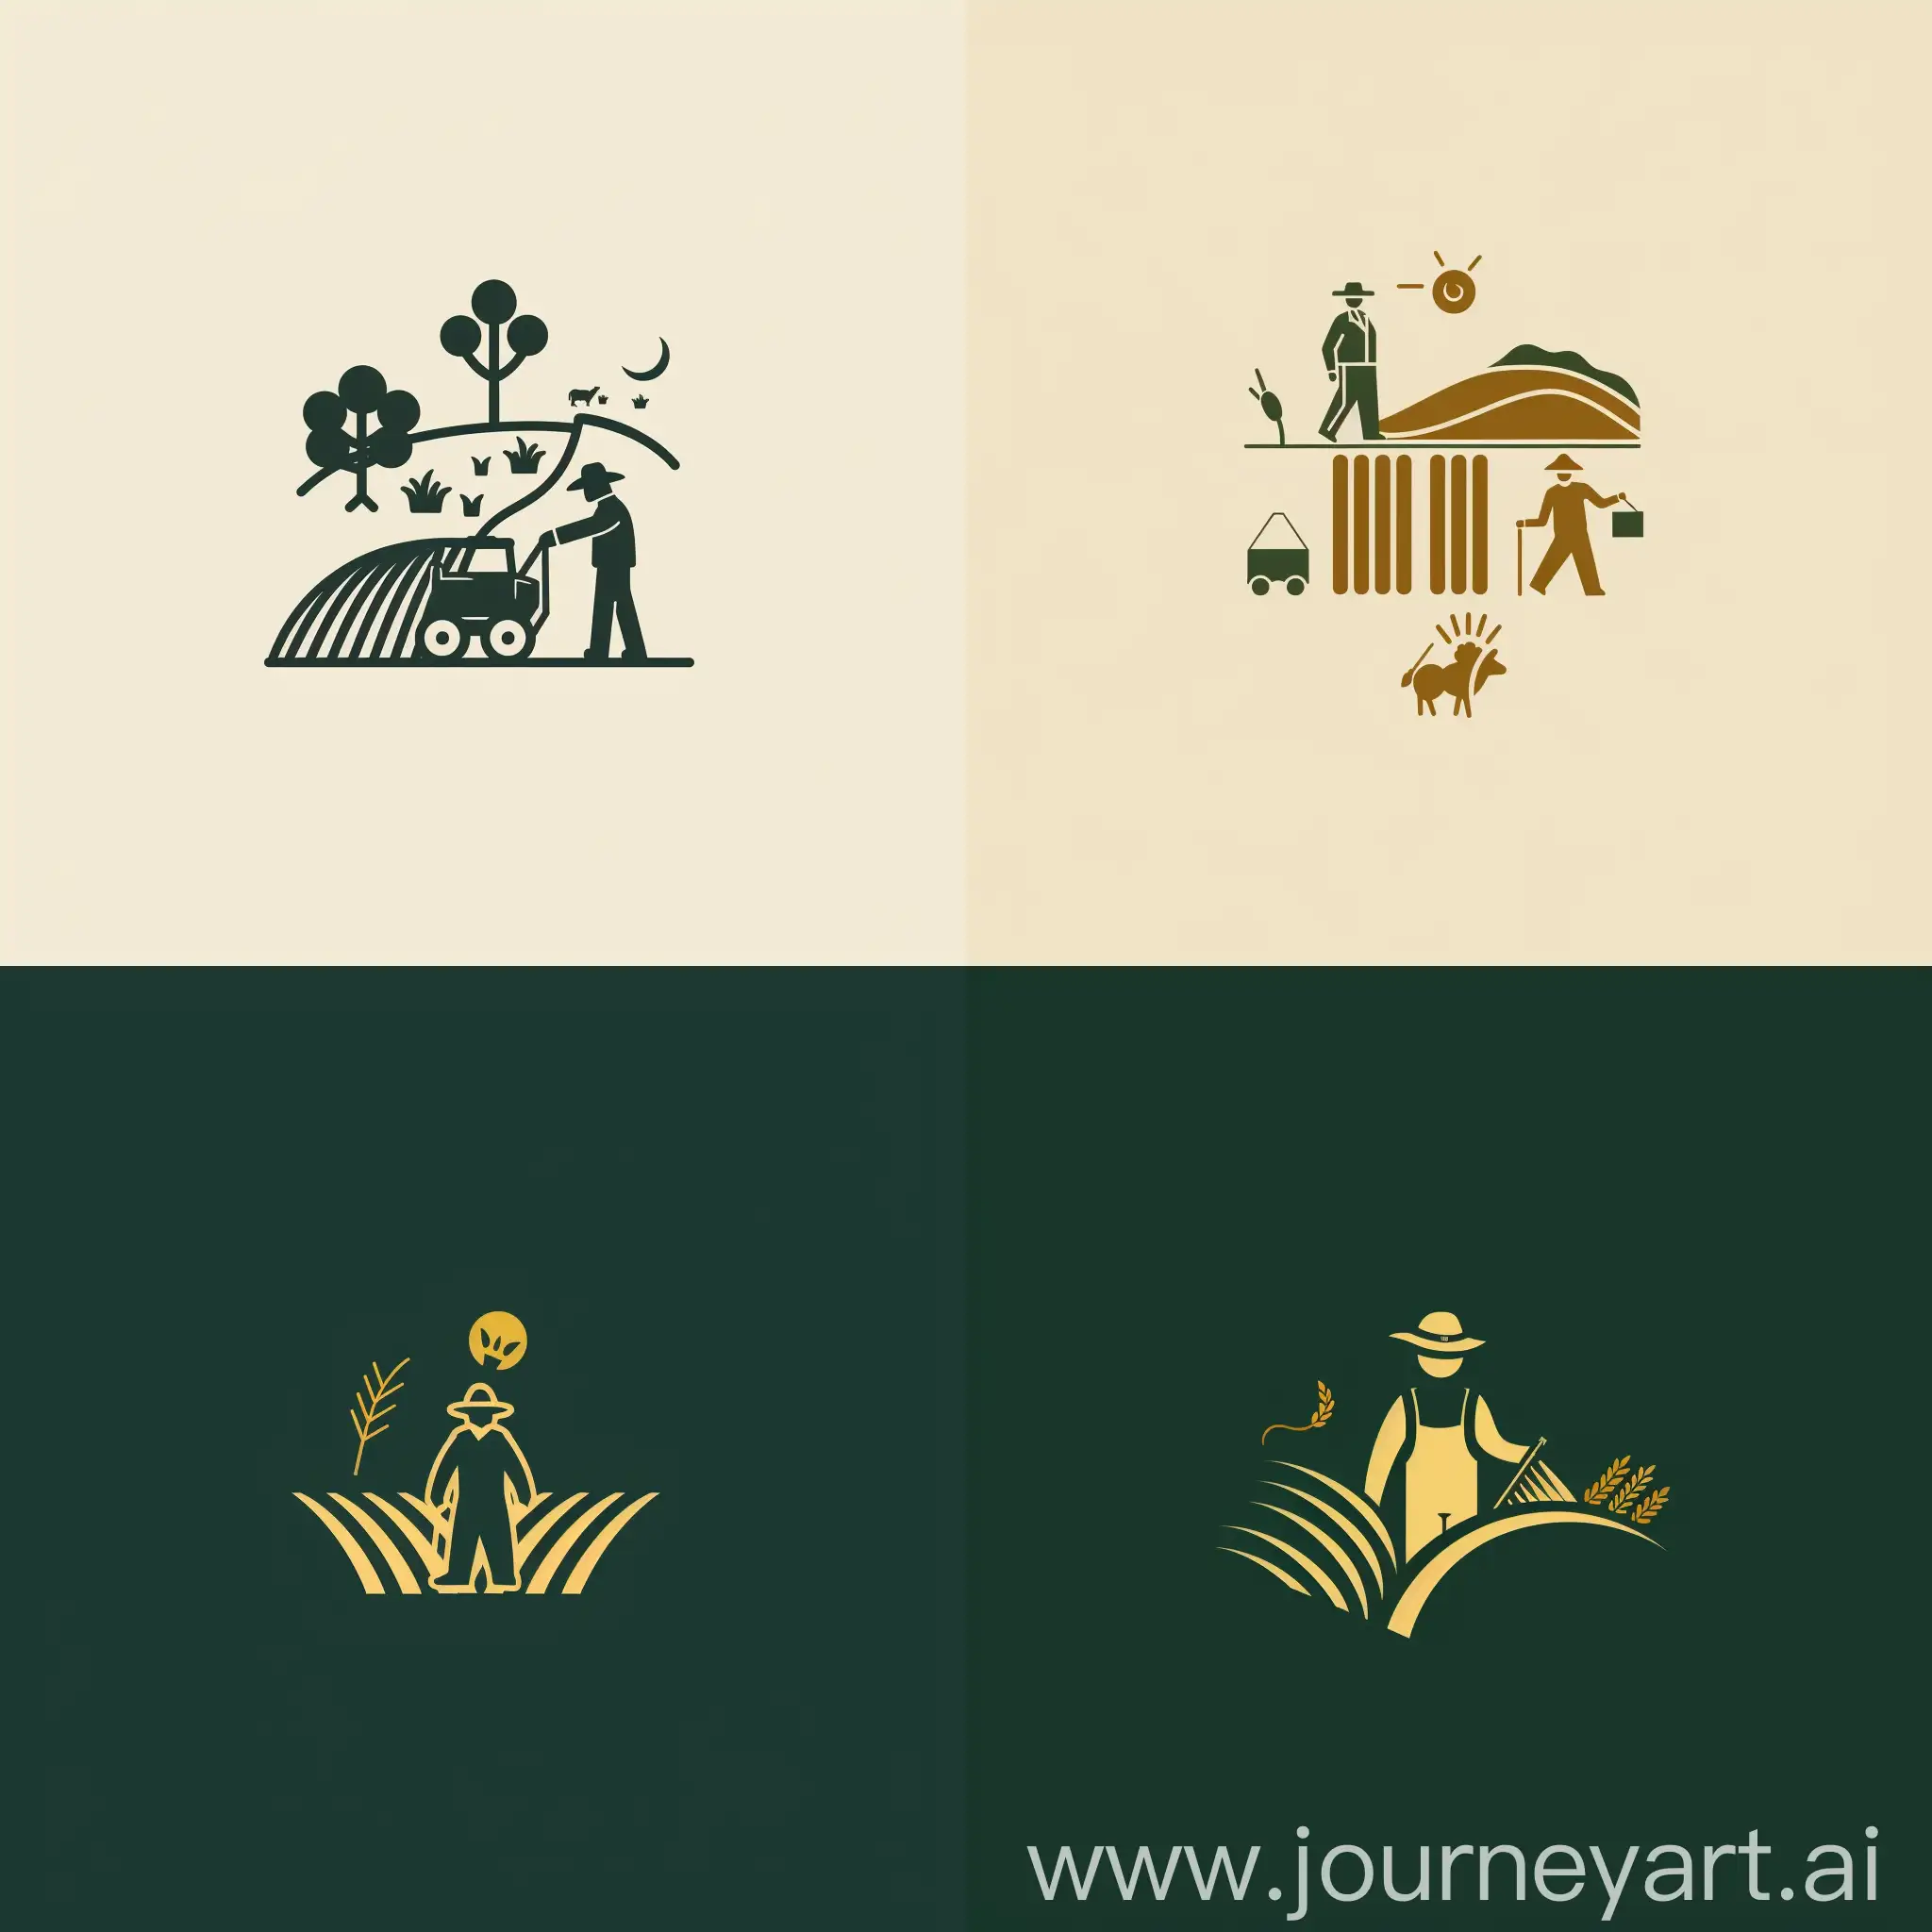 Minimalist logo containing farm and farmer for an agricultural company